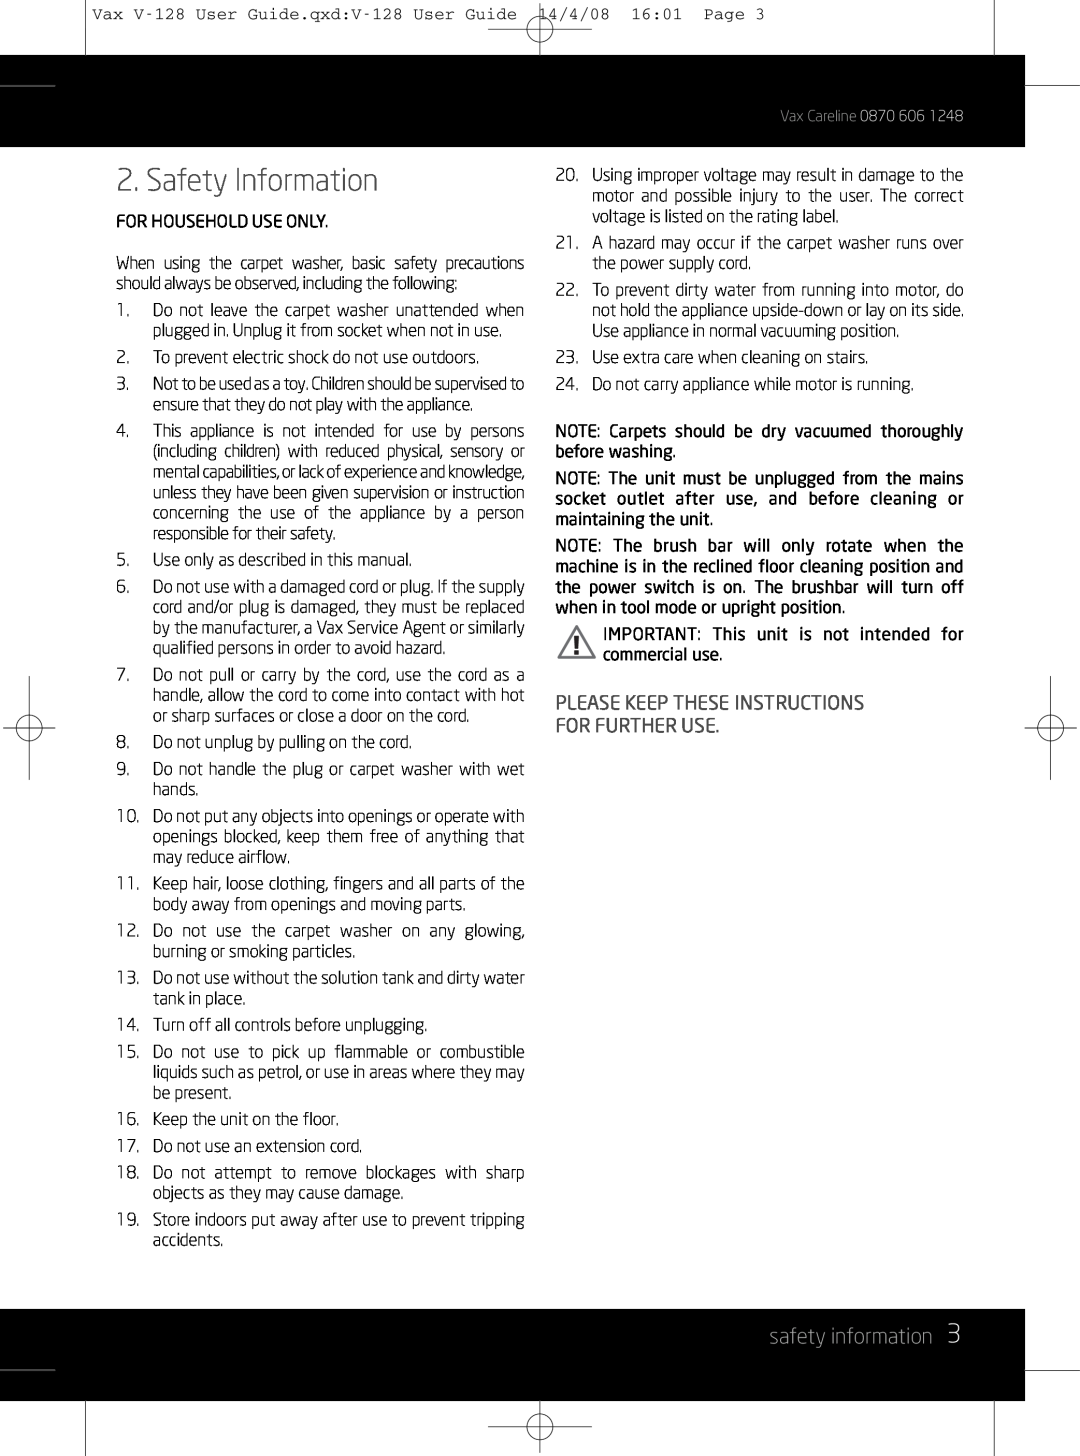 Vizio V-128 instruction manual Safety Information, safety information, Please Keep These Instructions For Further Use 